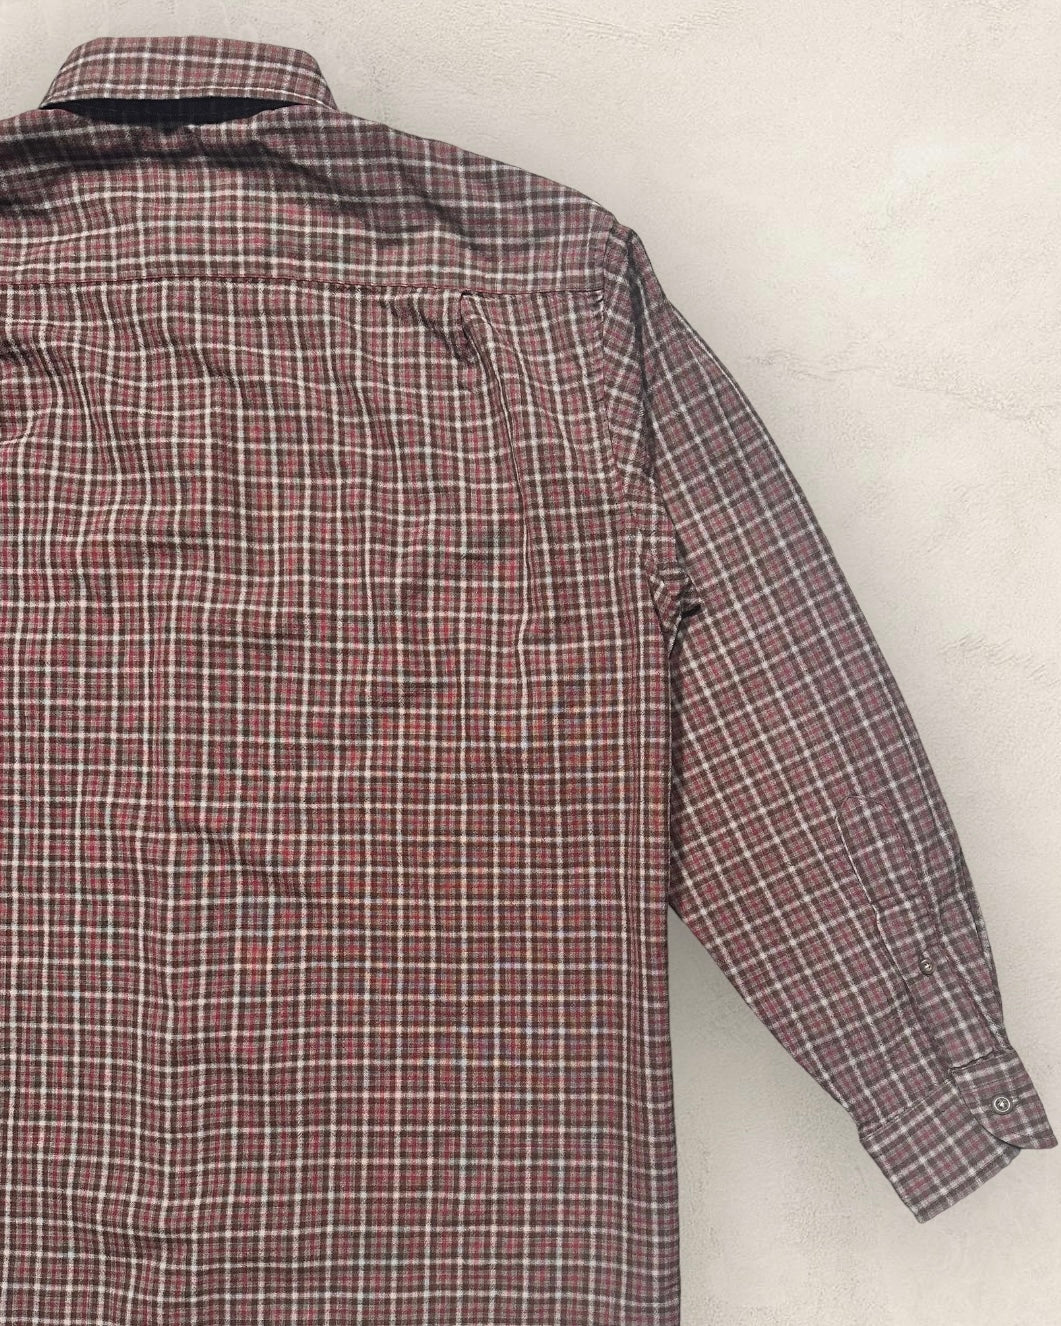 Pendleton wool shirt - Size L